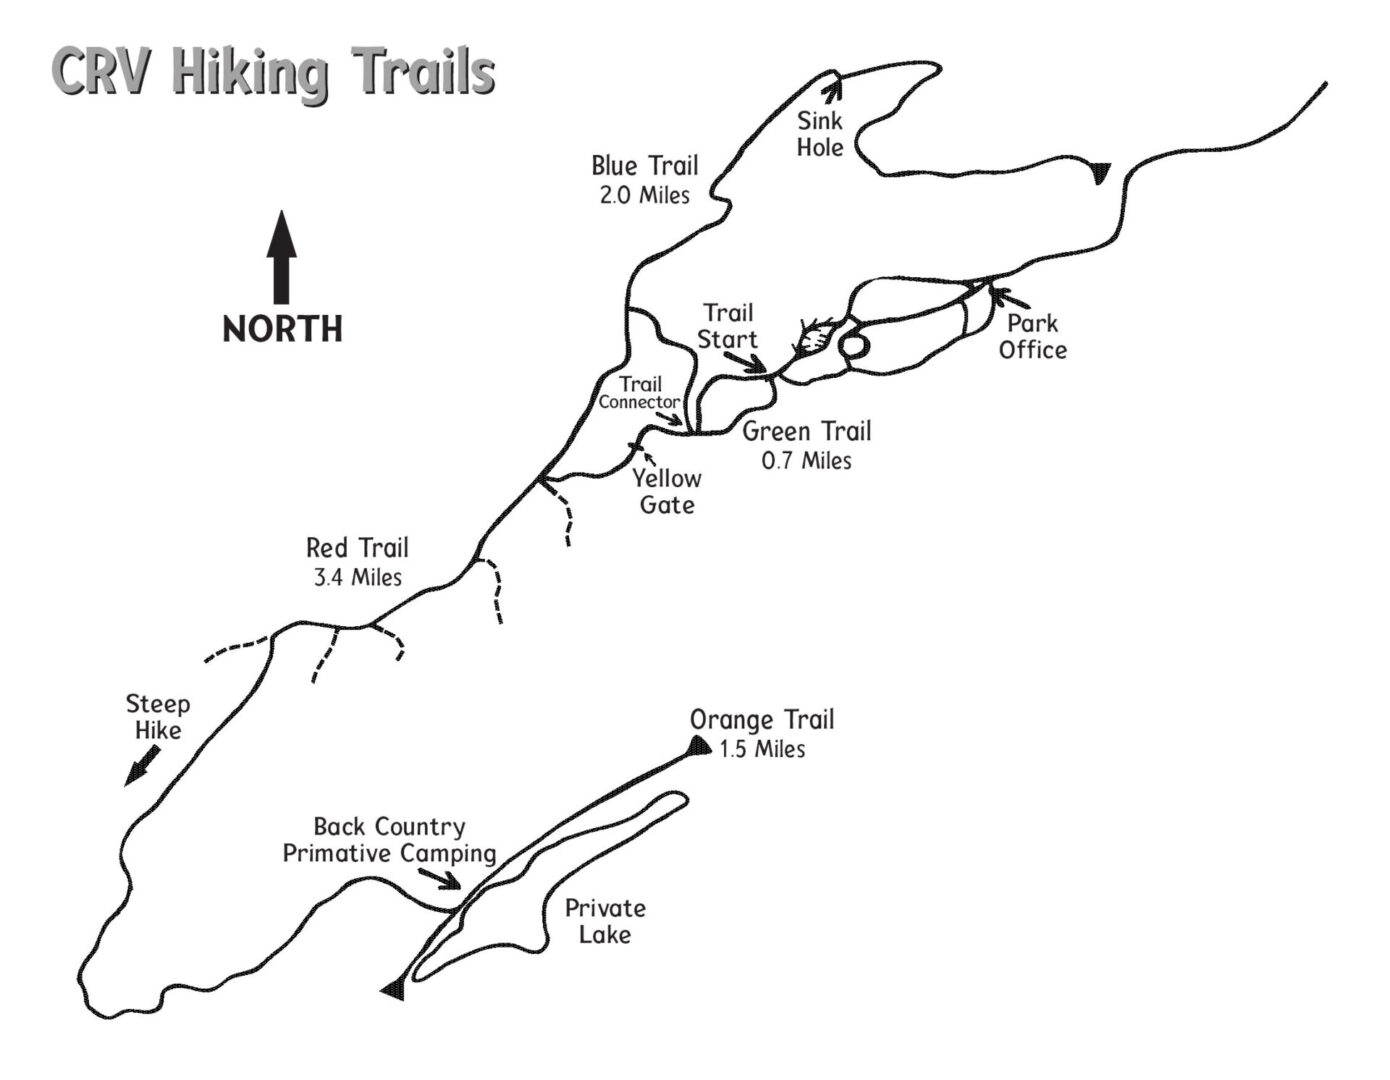 CRV_Hiking-trails